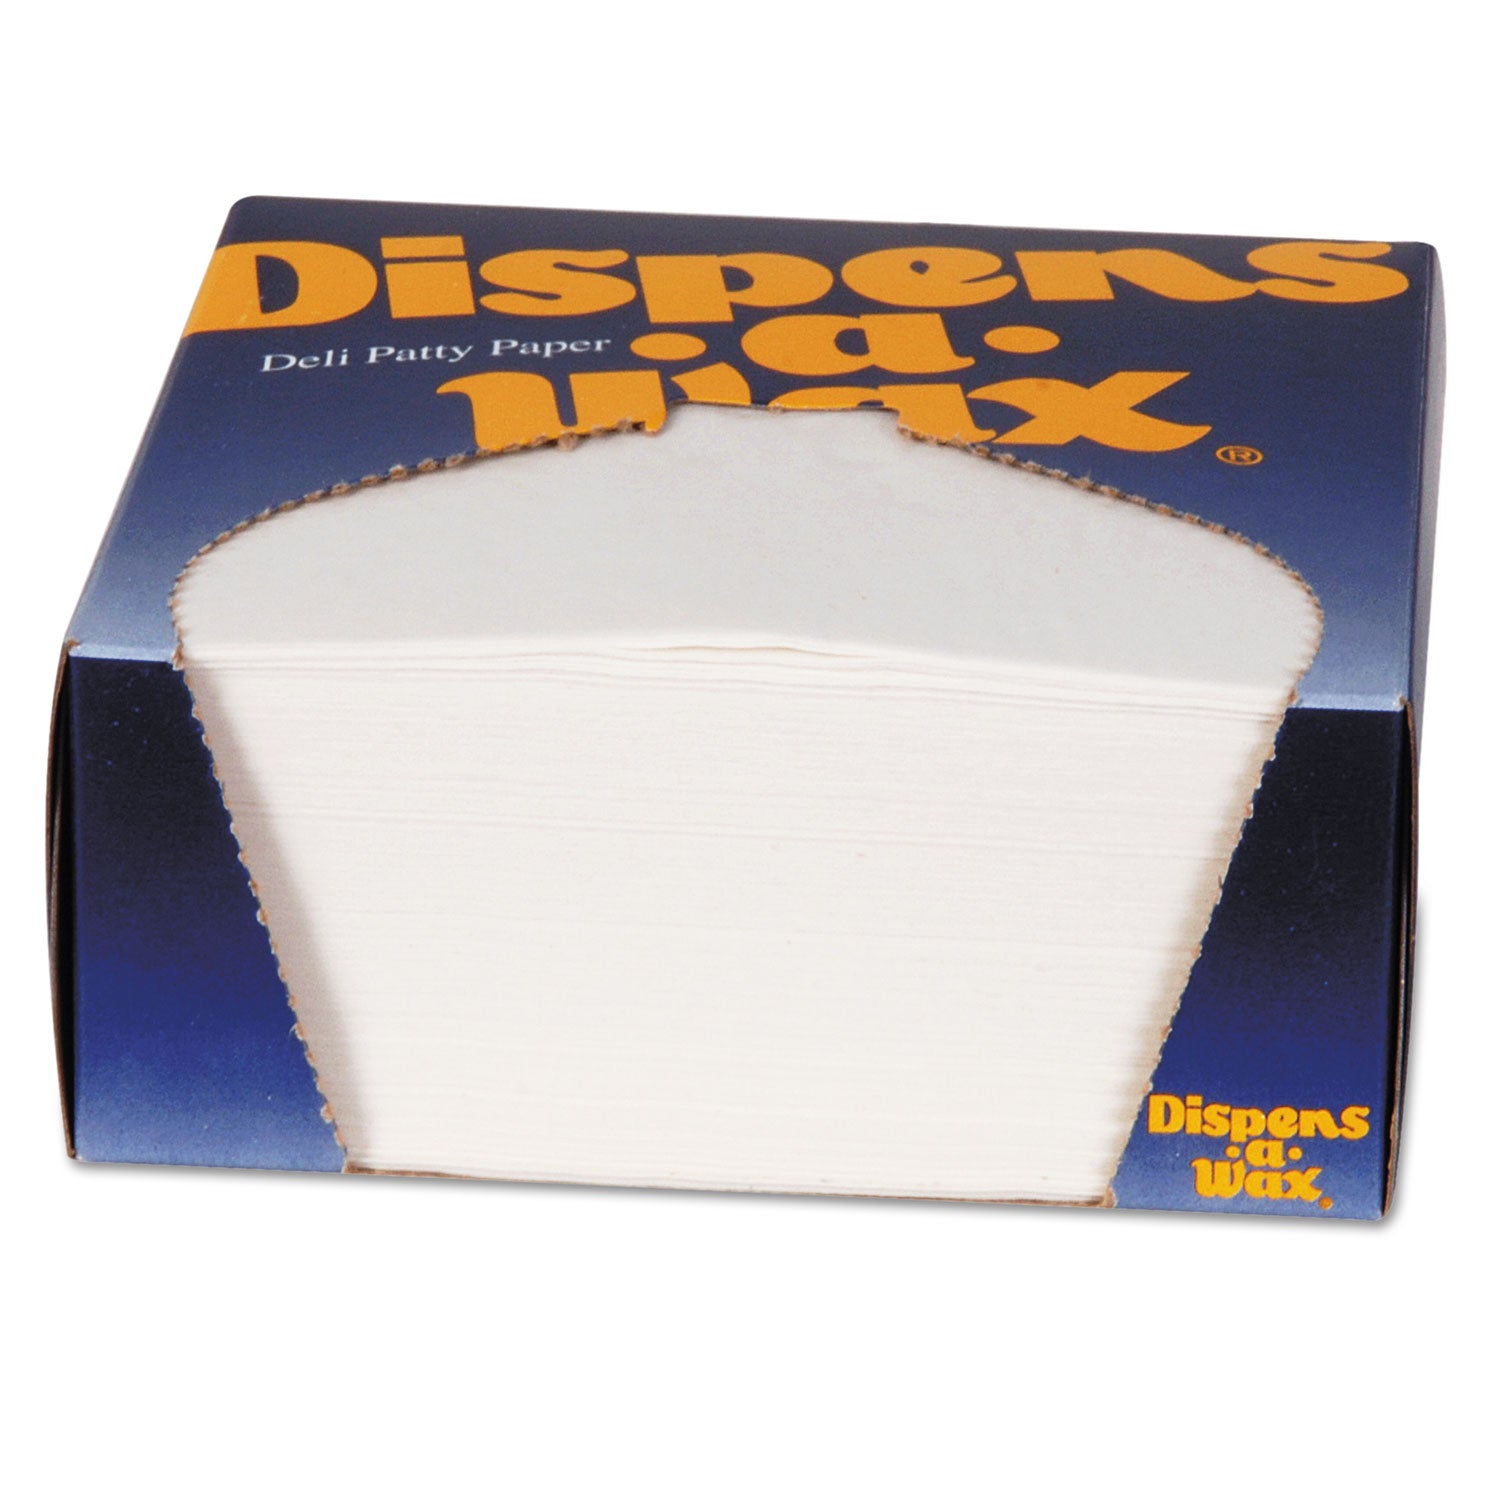 dispens-a-wax-waxed-deli-patty-paper-475-x-5-white-1000-box_dxe434bx - 1